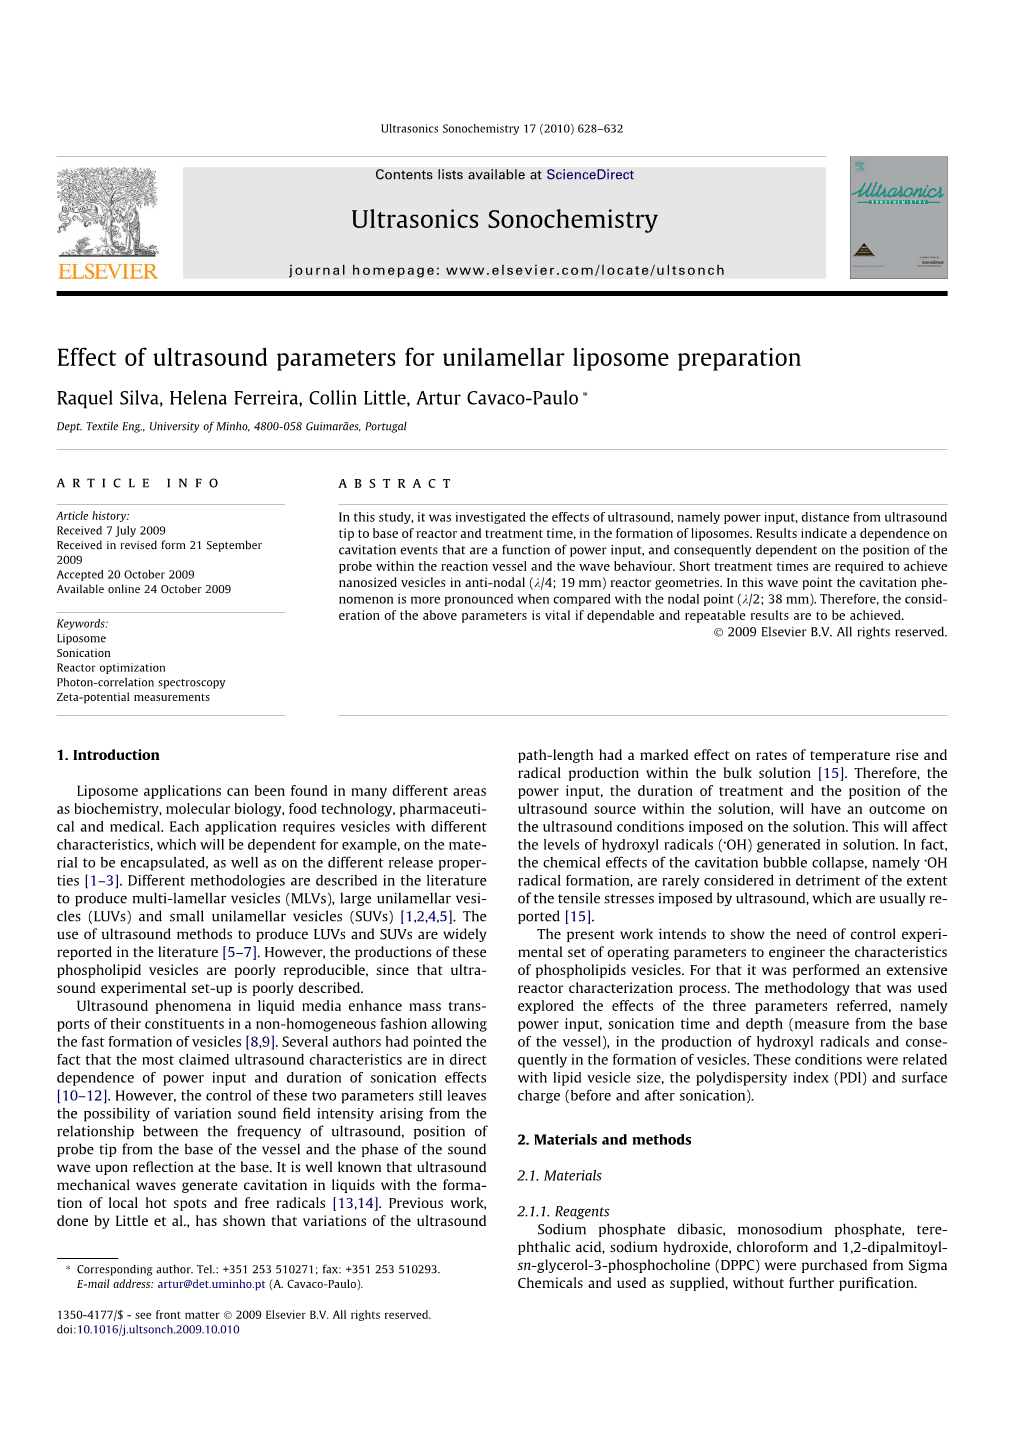 Effect of Ultrasound Parameters for Unilamellar Liposome Preparation